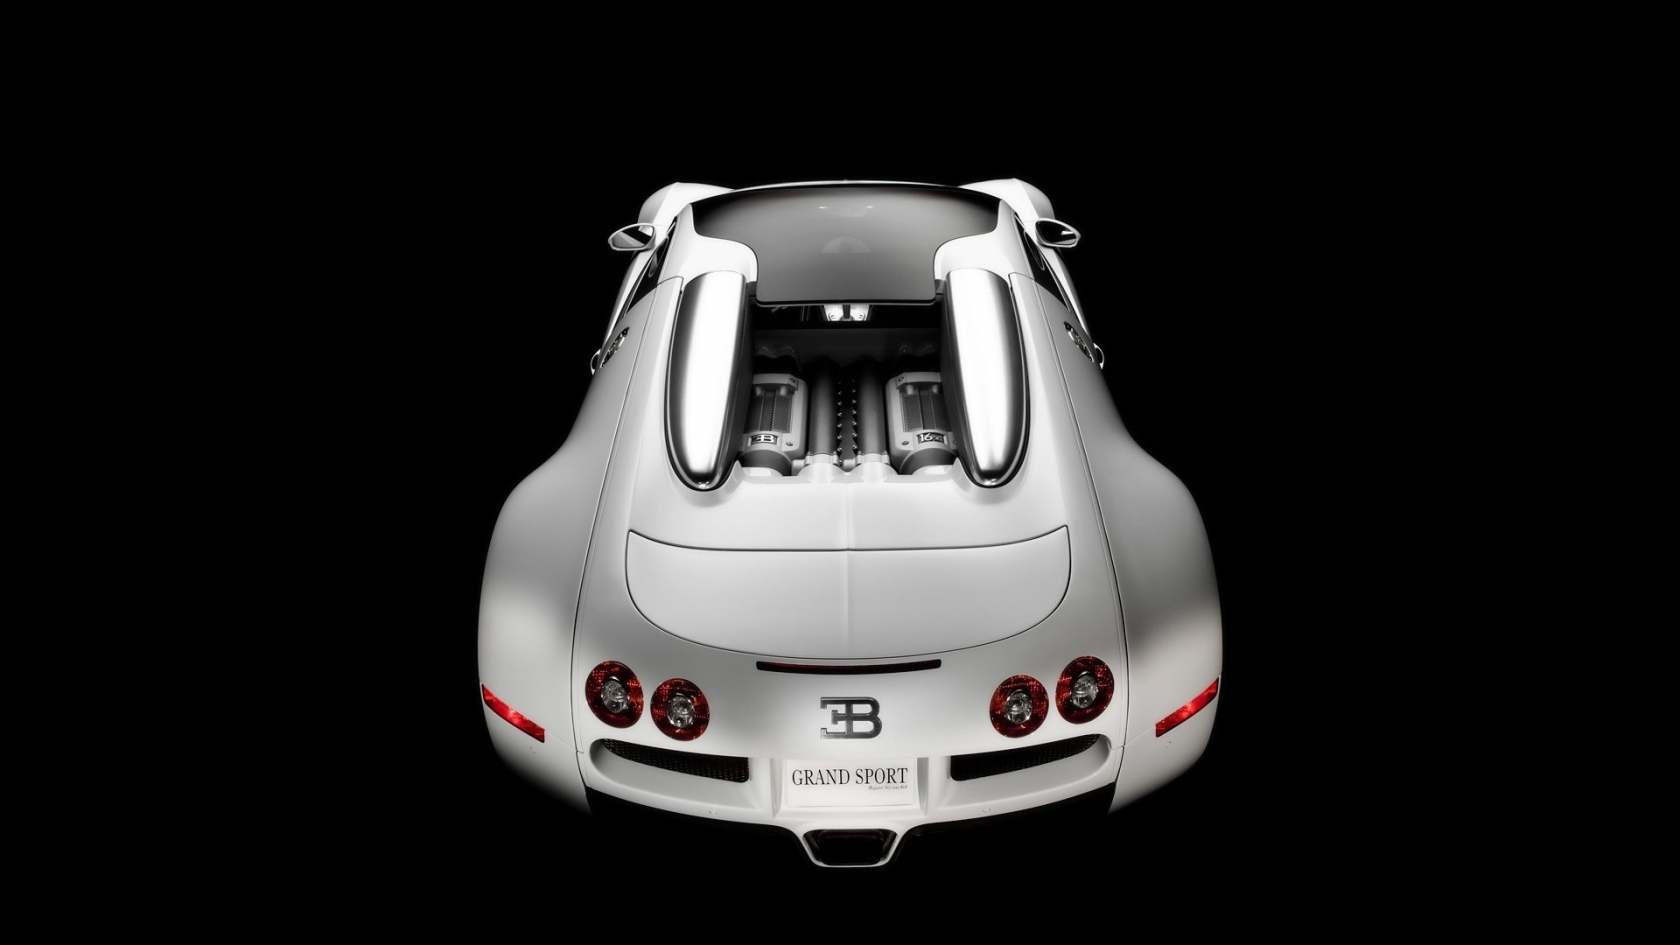 Bugatti Veyron 16.4 Grand Sport Production Version 2009 - Studio Rear Top for 1680 x 945 HDTV resolution